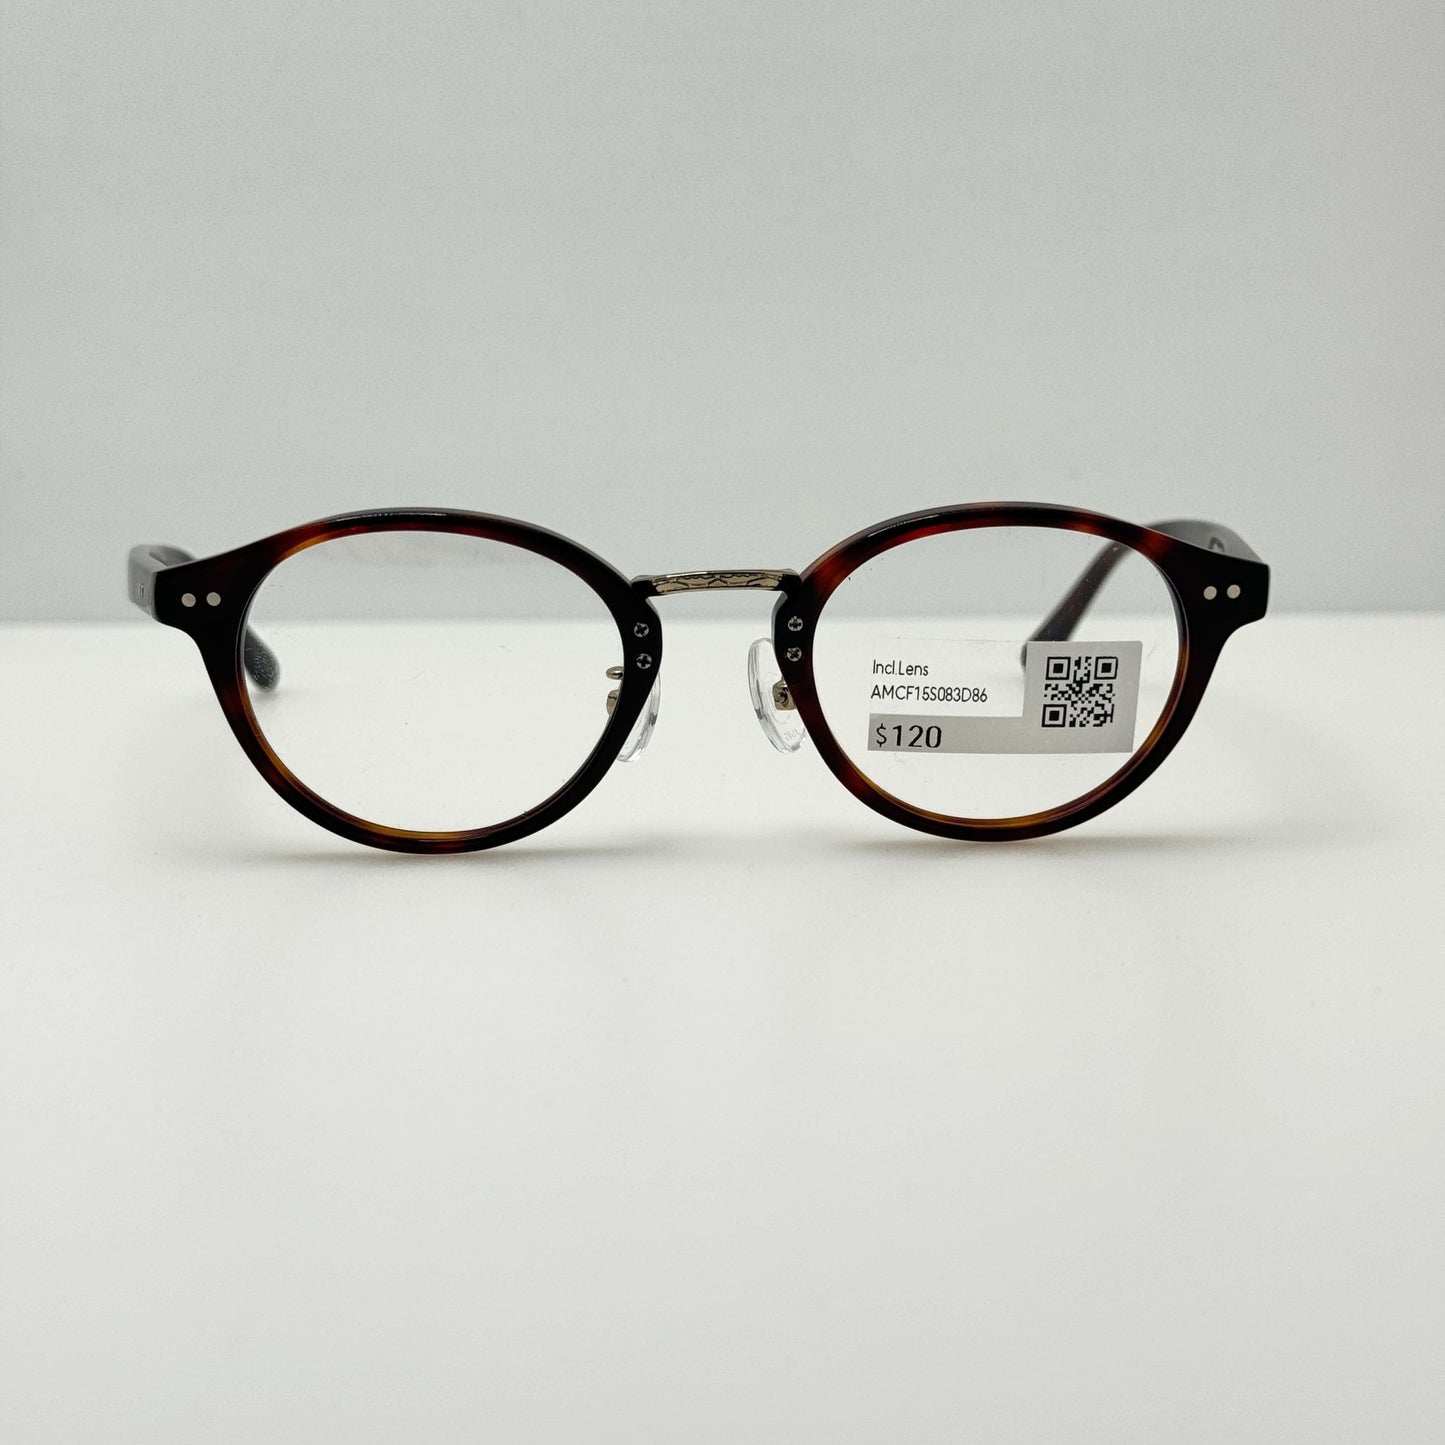 Jins Eyeglasses Eye Glasses Frames MCF-15S-083D 86 46-21-152 37.5